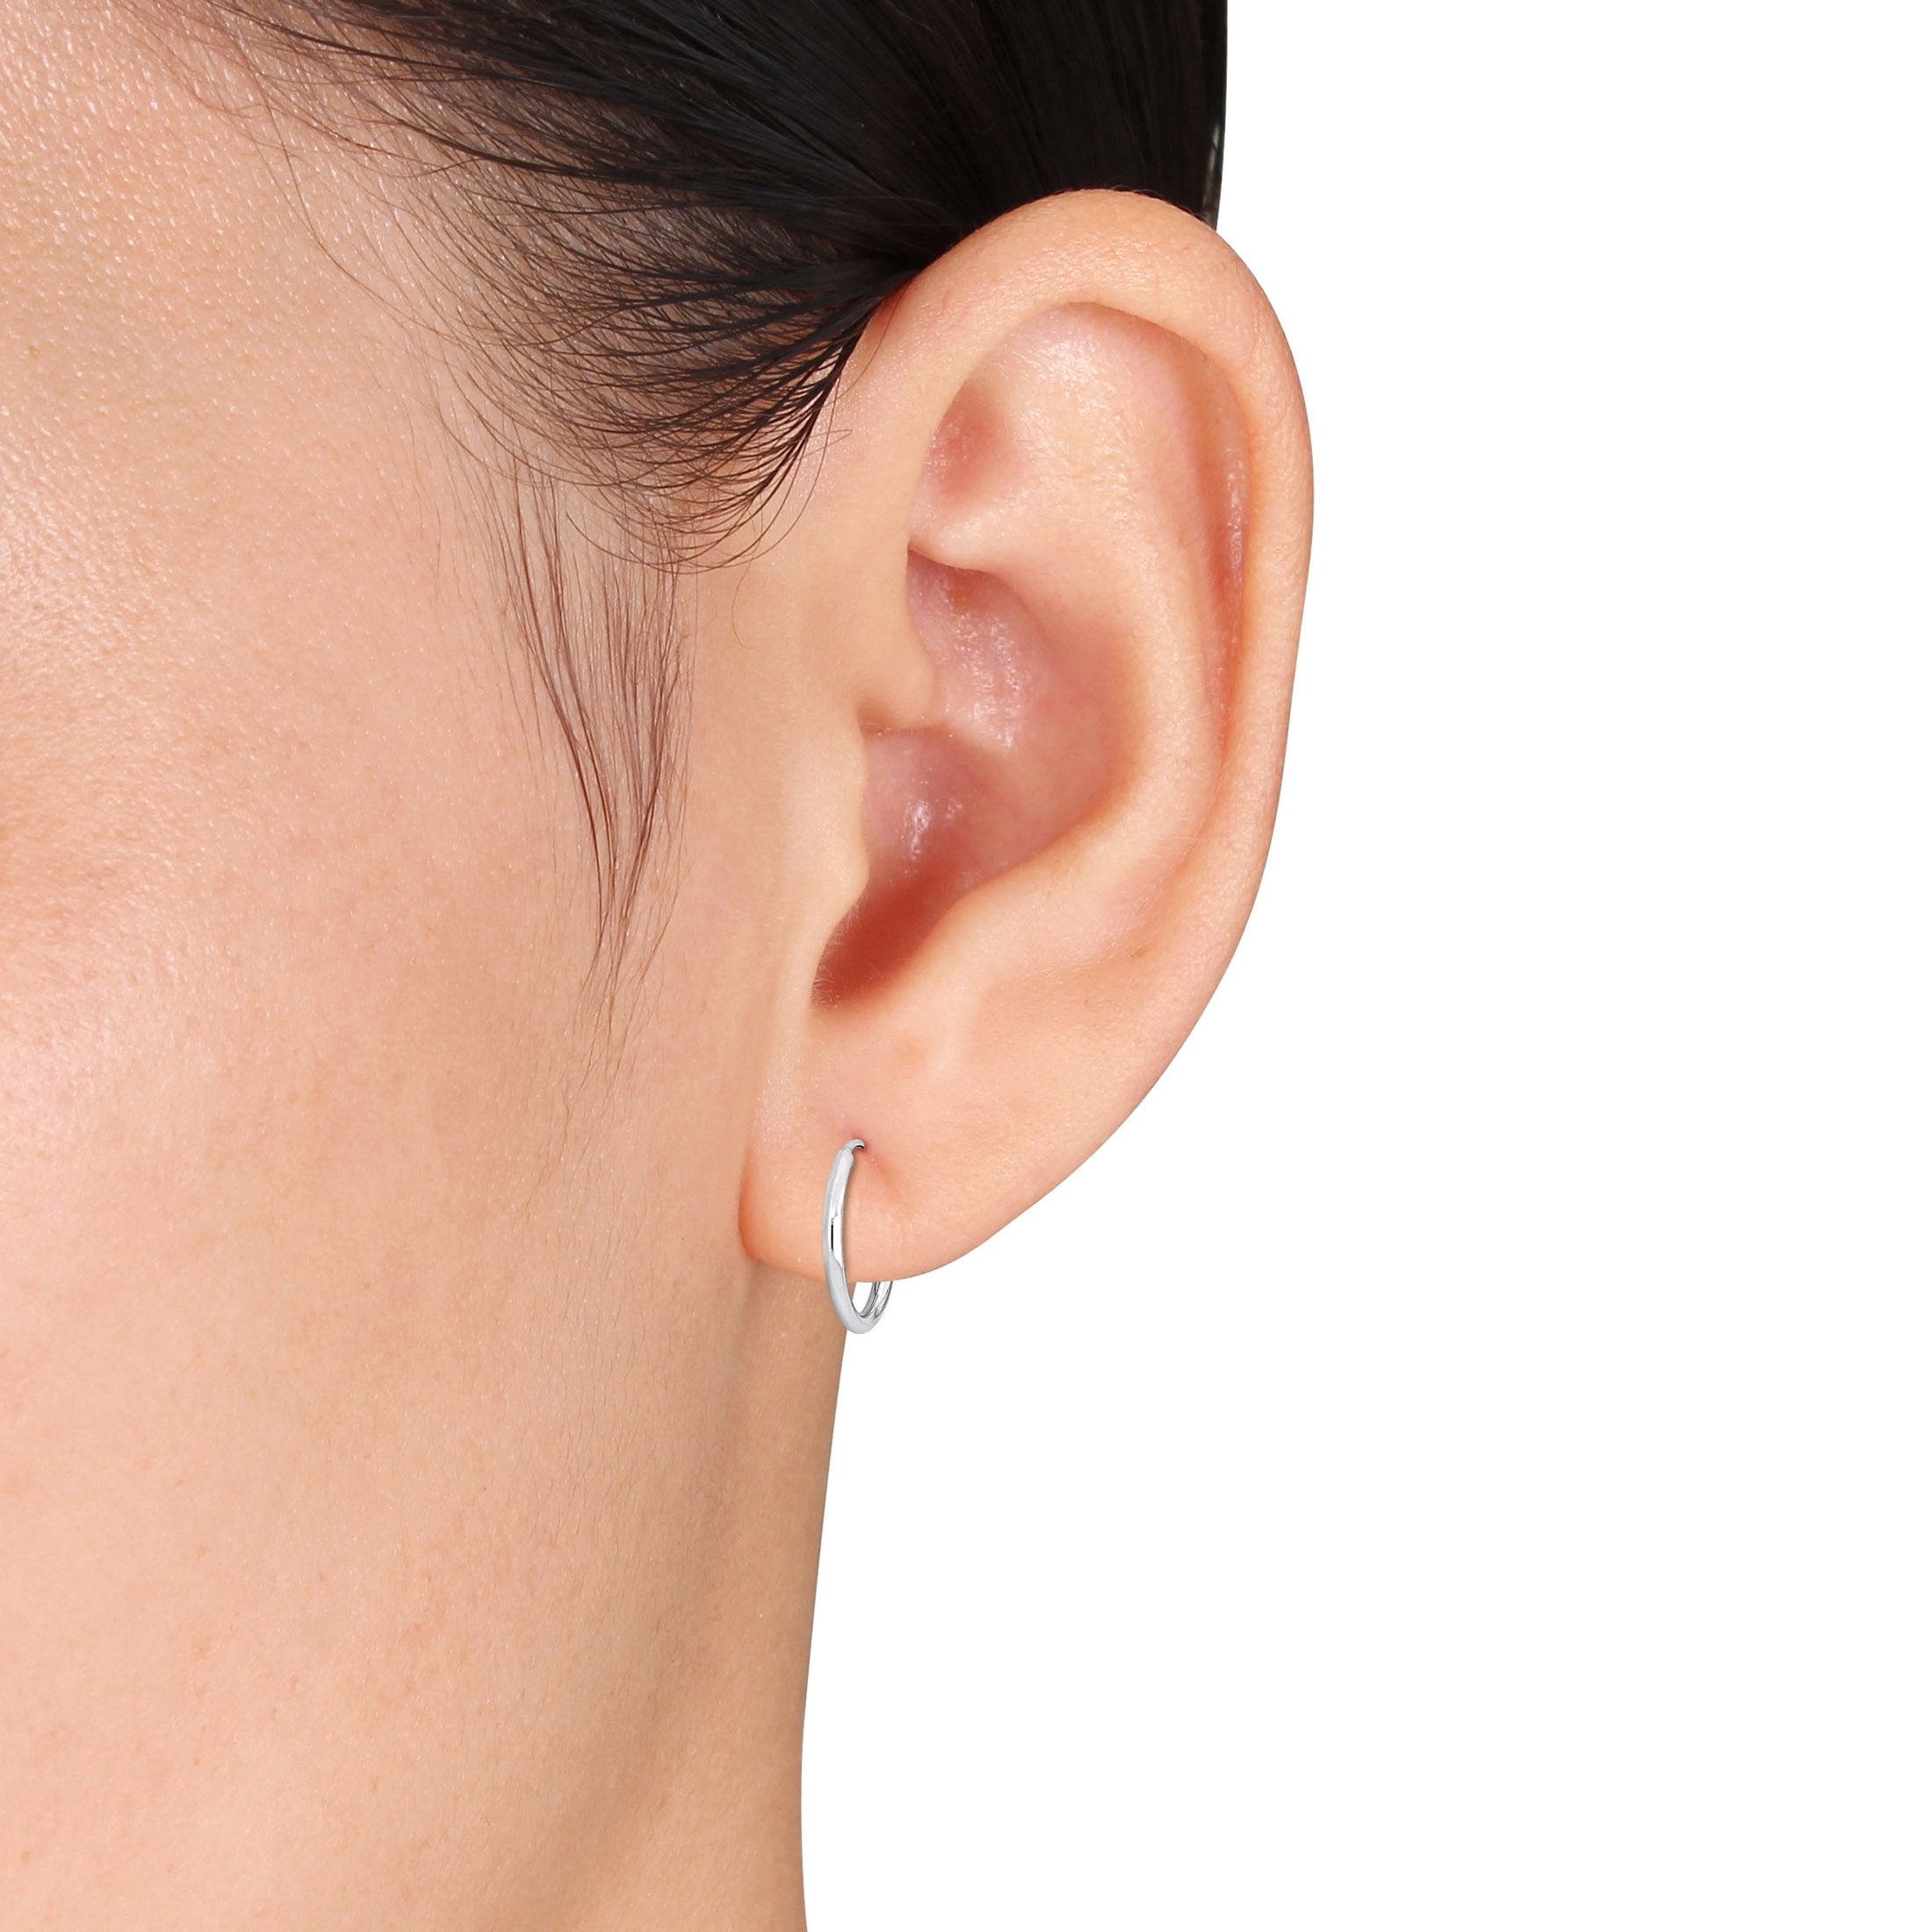 Thin Wire Hoop Earrings in 18k gold over sterling silver, 50mm – Miabella